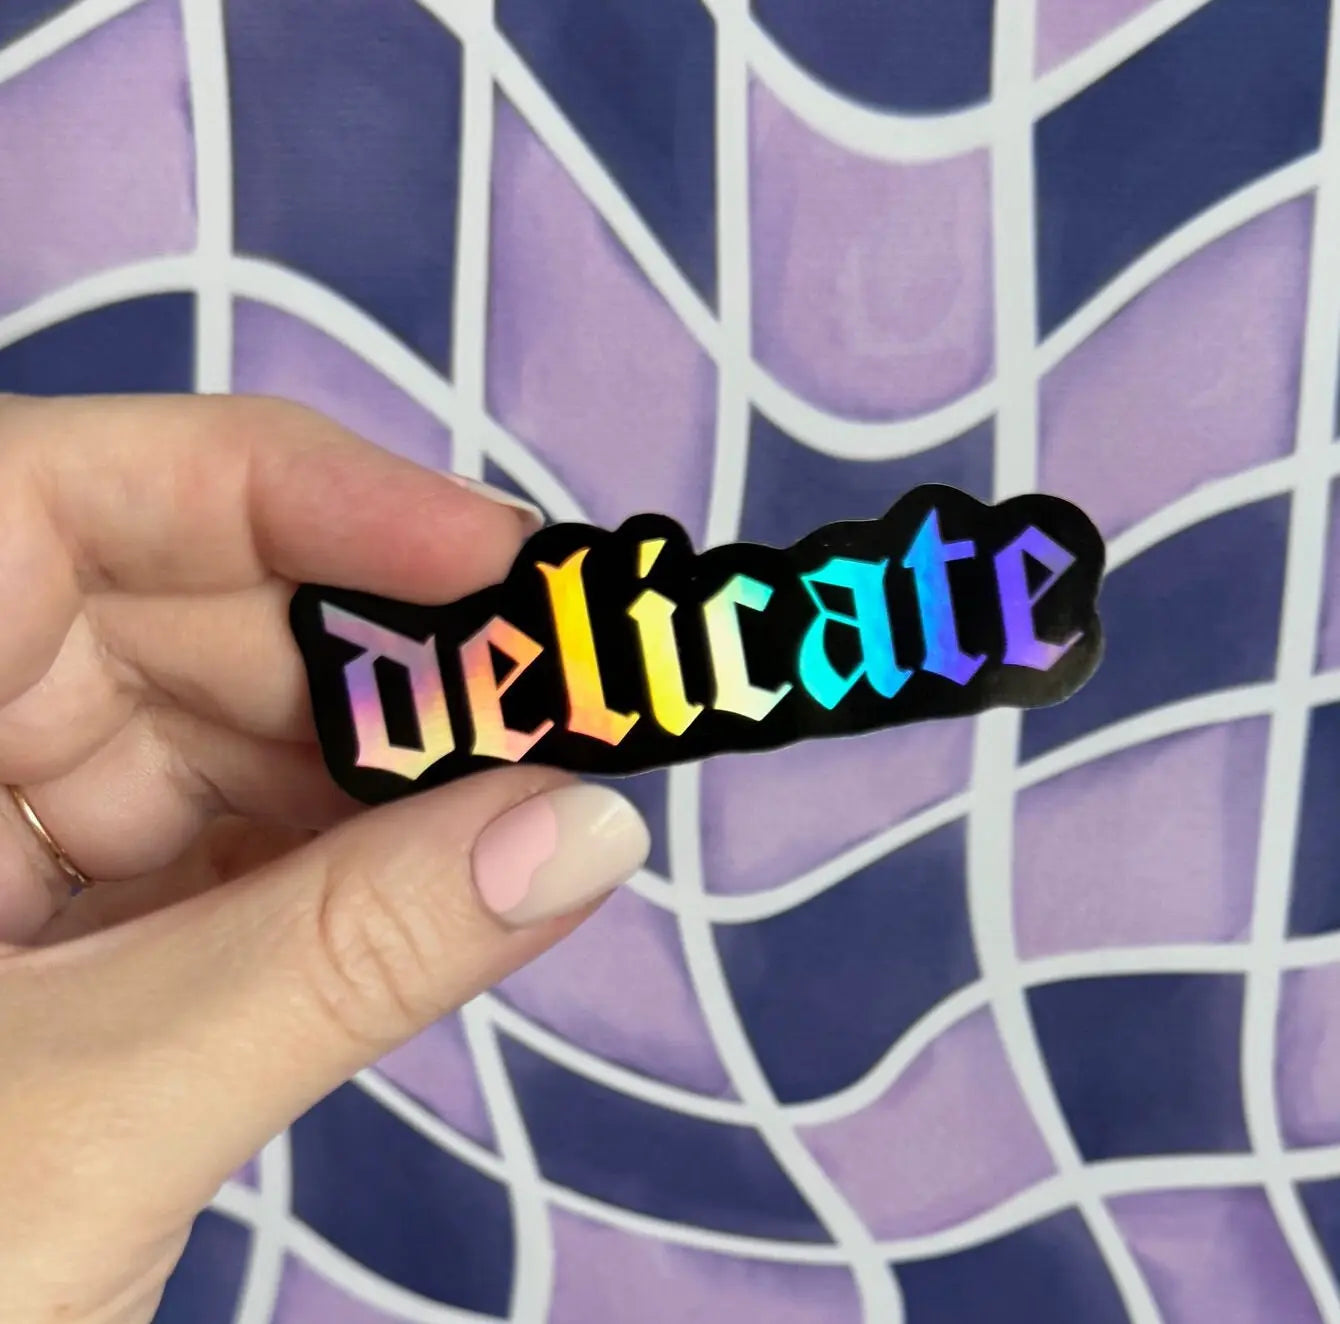 Delicate sticker MangoIllustrated